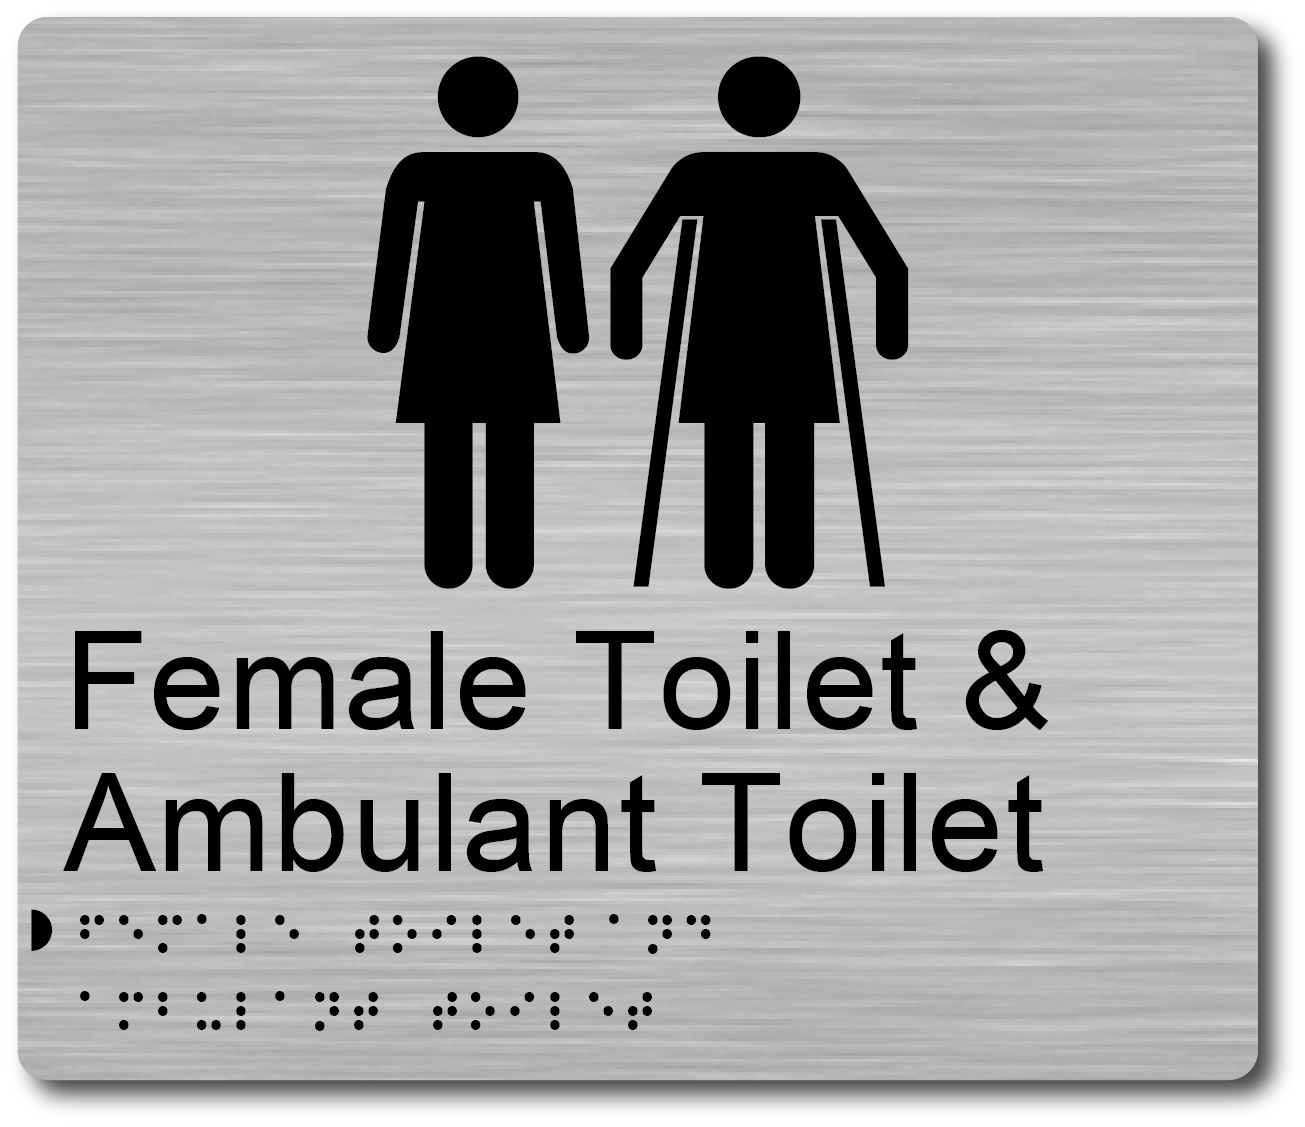 Female Toilet & Ambulant Toilet